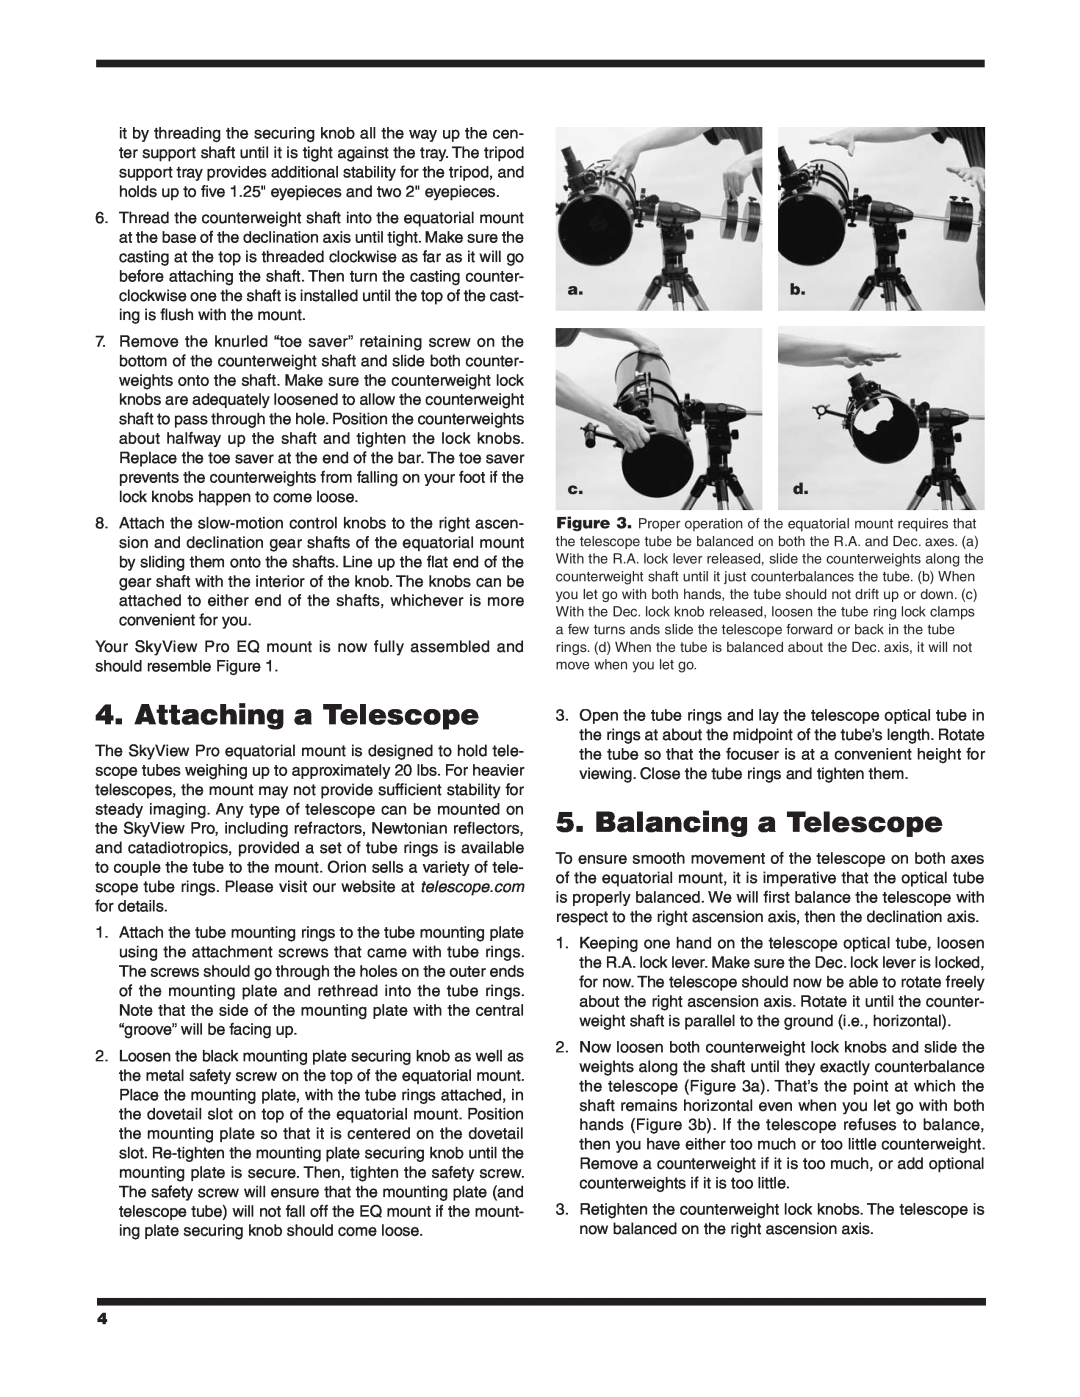 Orion 9829 instruction manual Attaching a Telescope, Balancing a Telescope, a.b c.d 